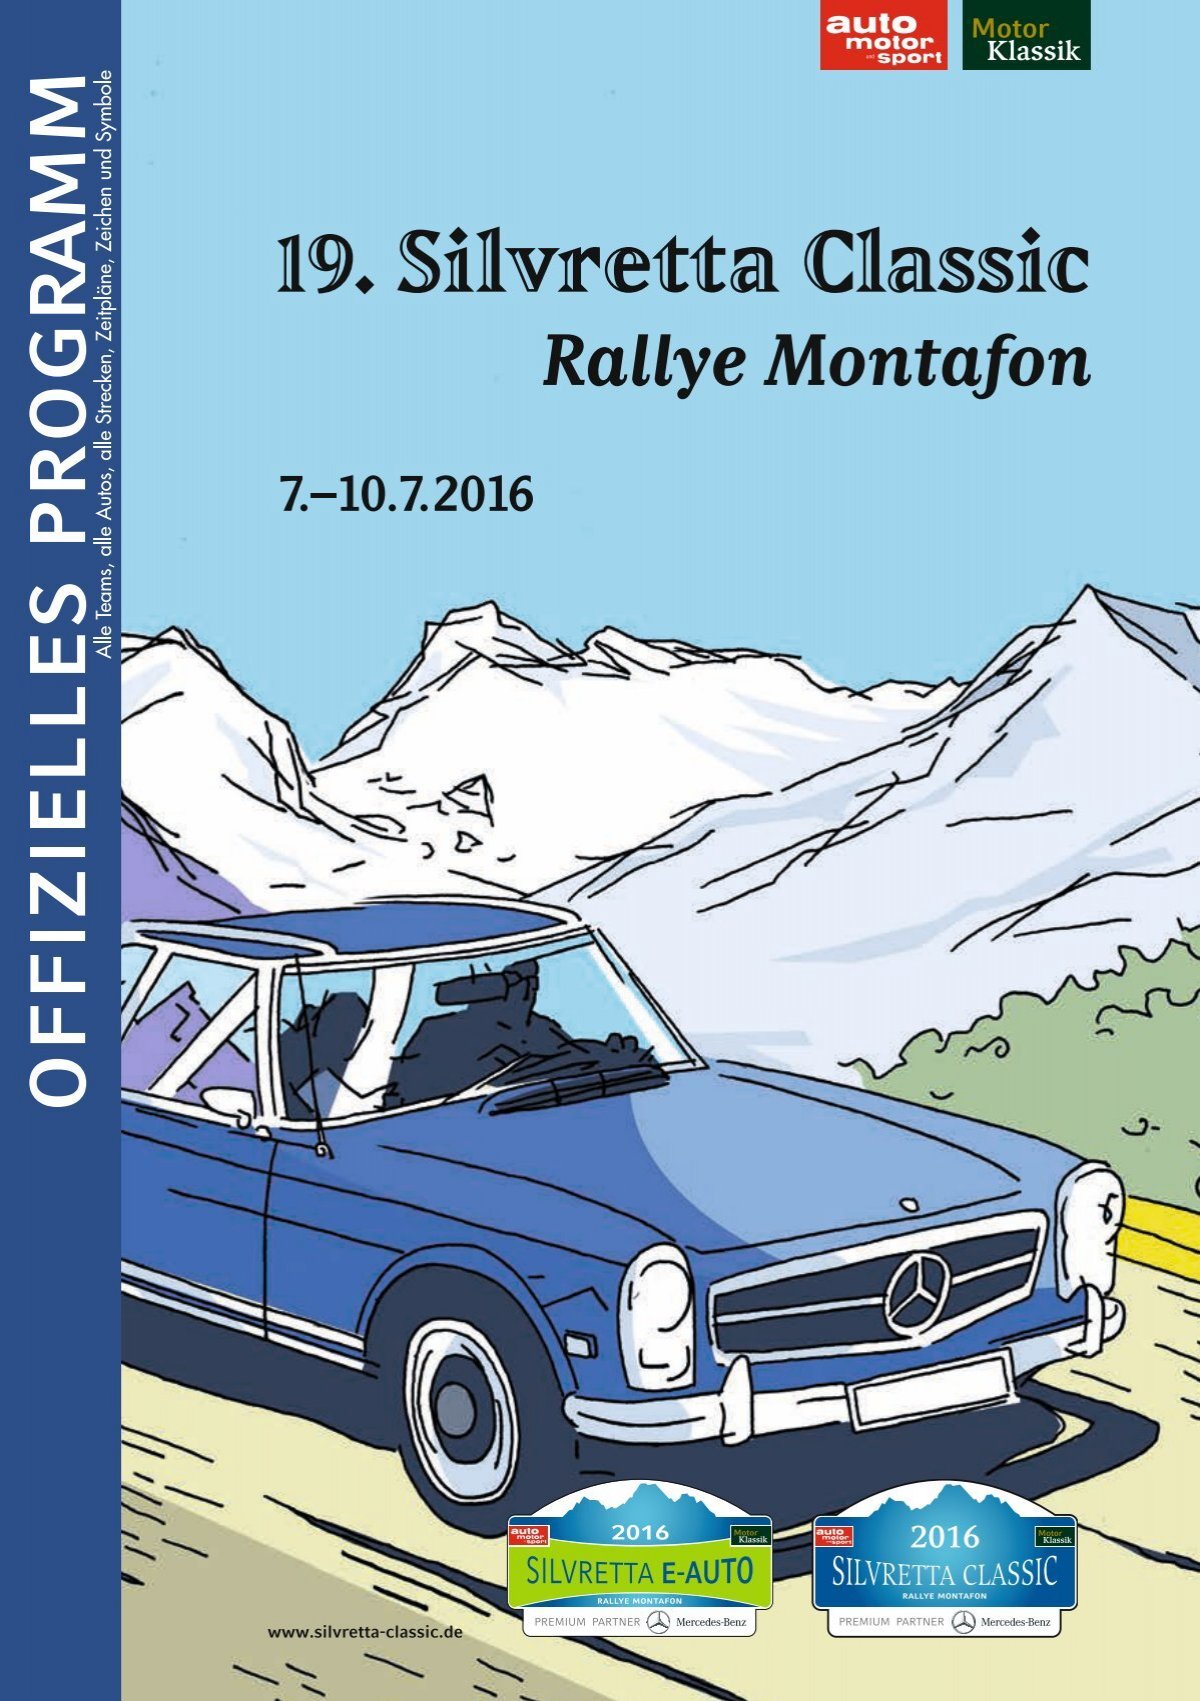 19. Silvretta Classic - Rallye Montafon